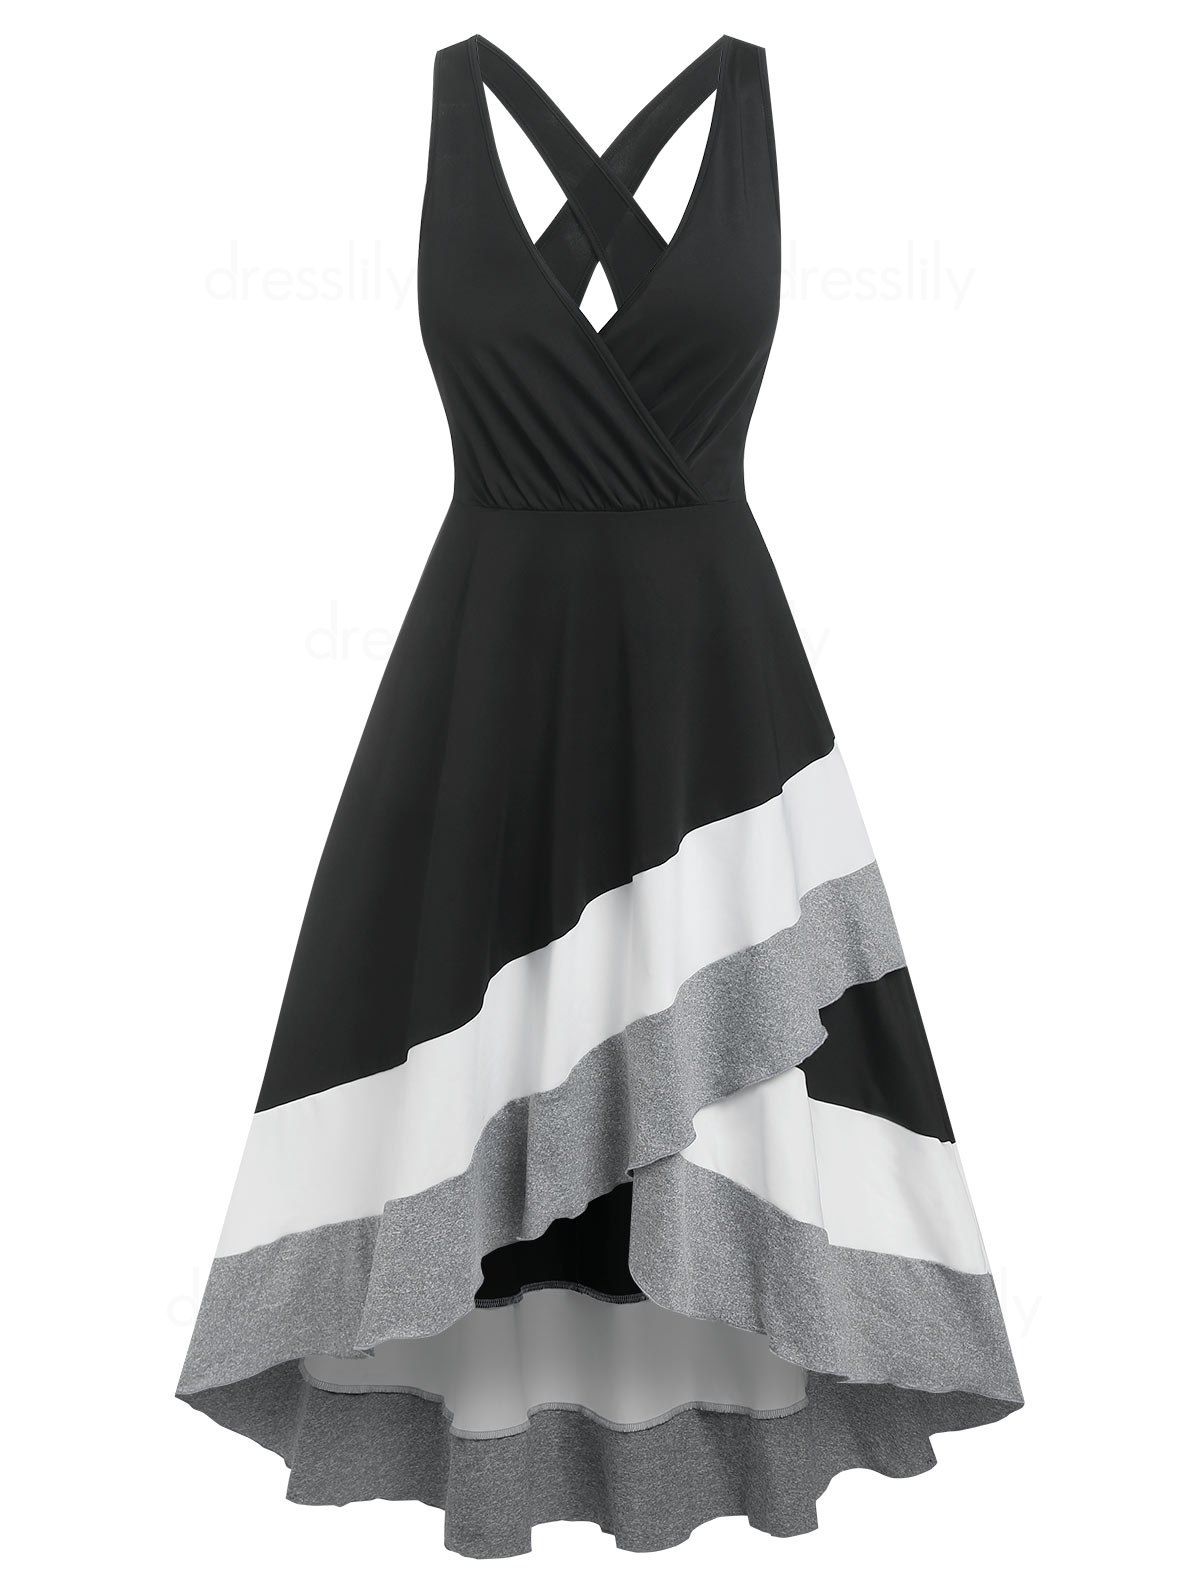 Colorblock High Low Dress Cross Back Surplice Plunge Midi Dress Casual Sleeveless Asymmetric Dress - BLACK L